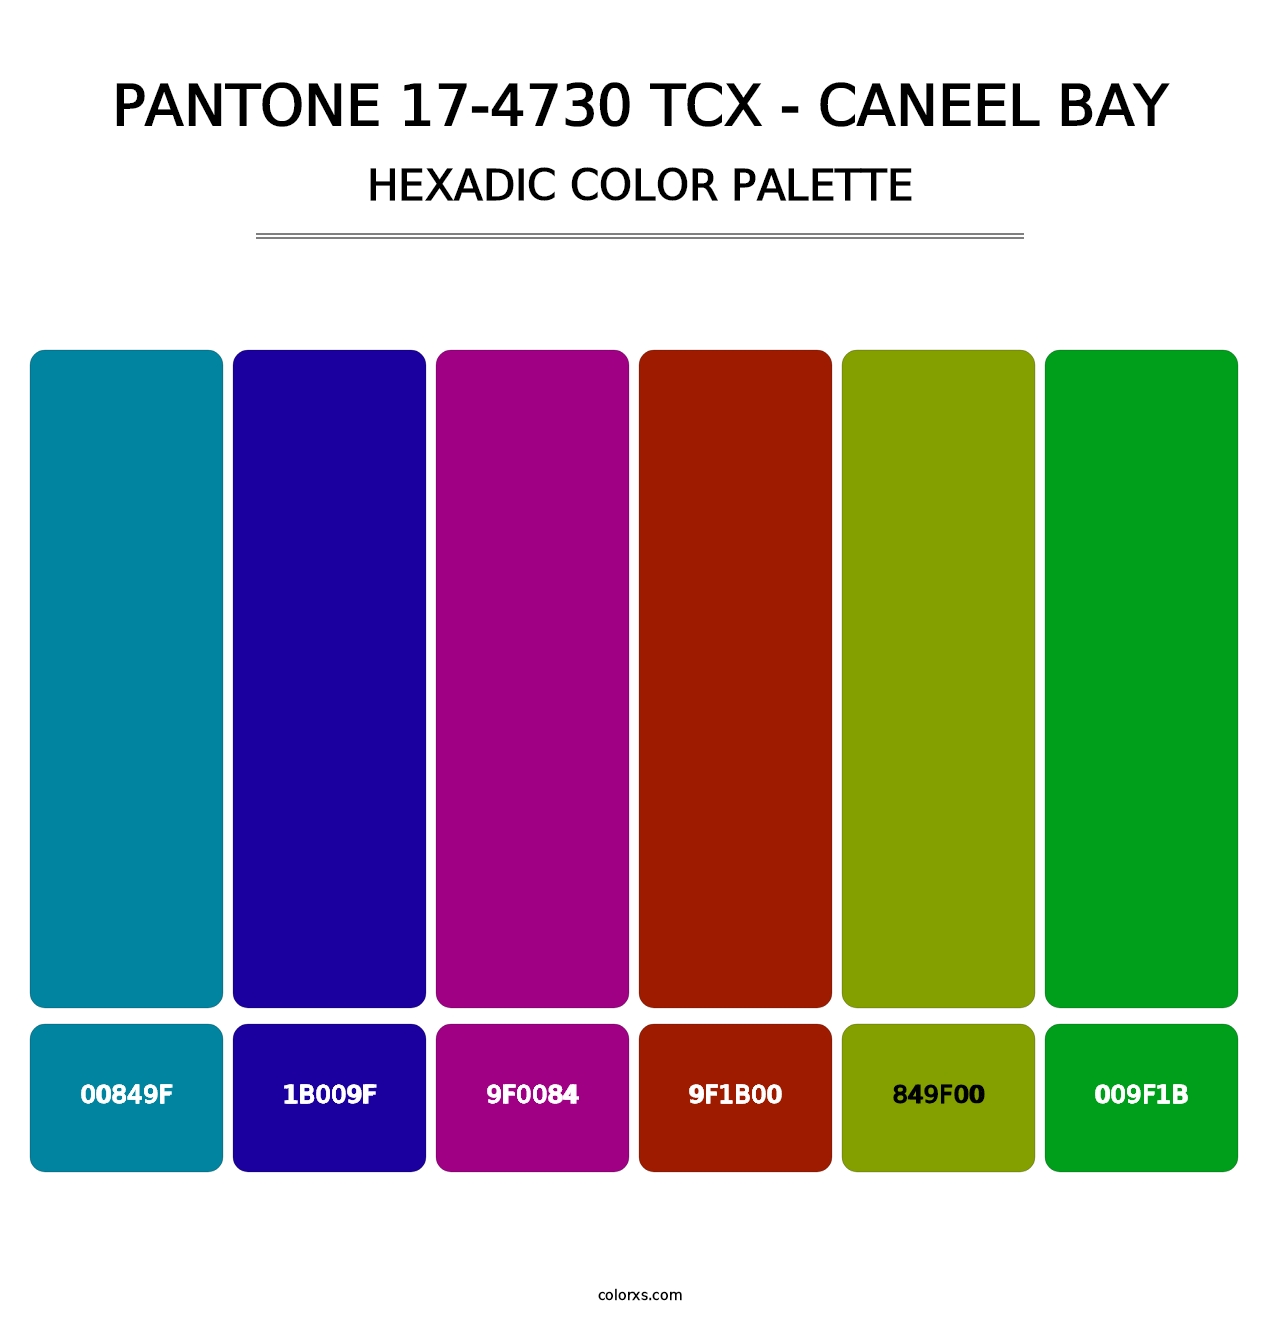 PANTONE 17-4730 TCX - Caneel Bay - Hexadic Color Palette